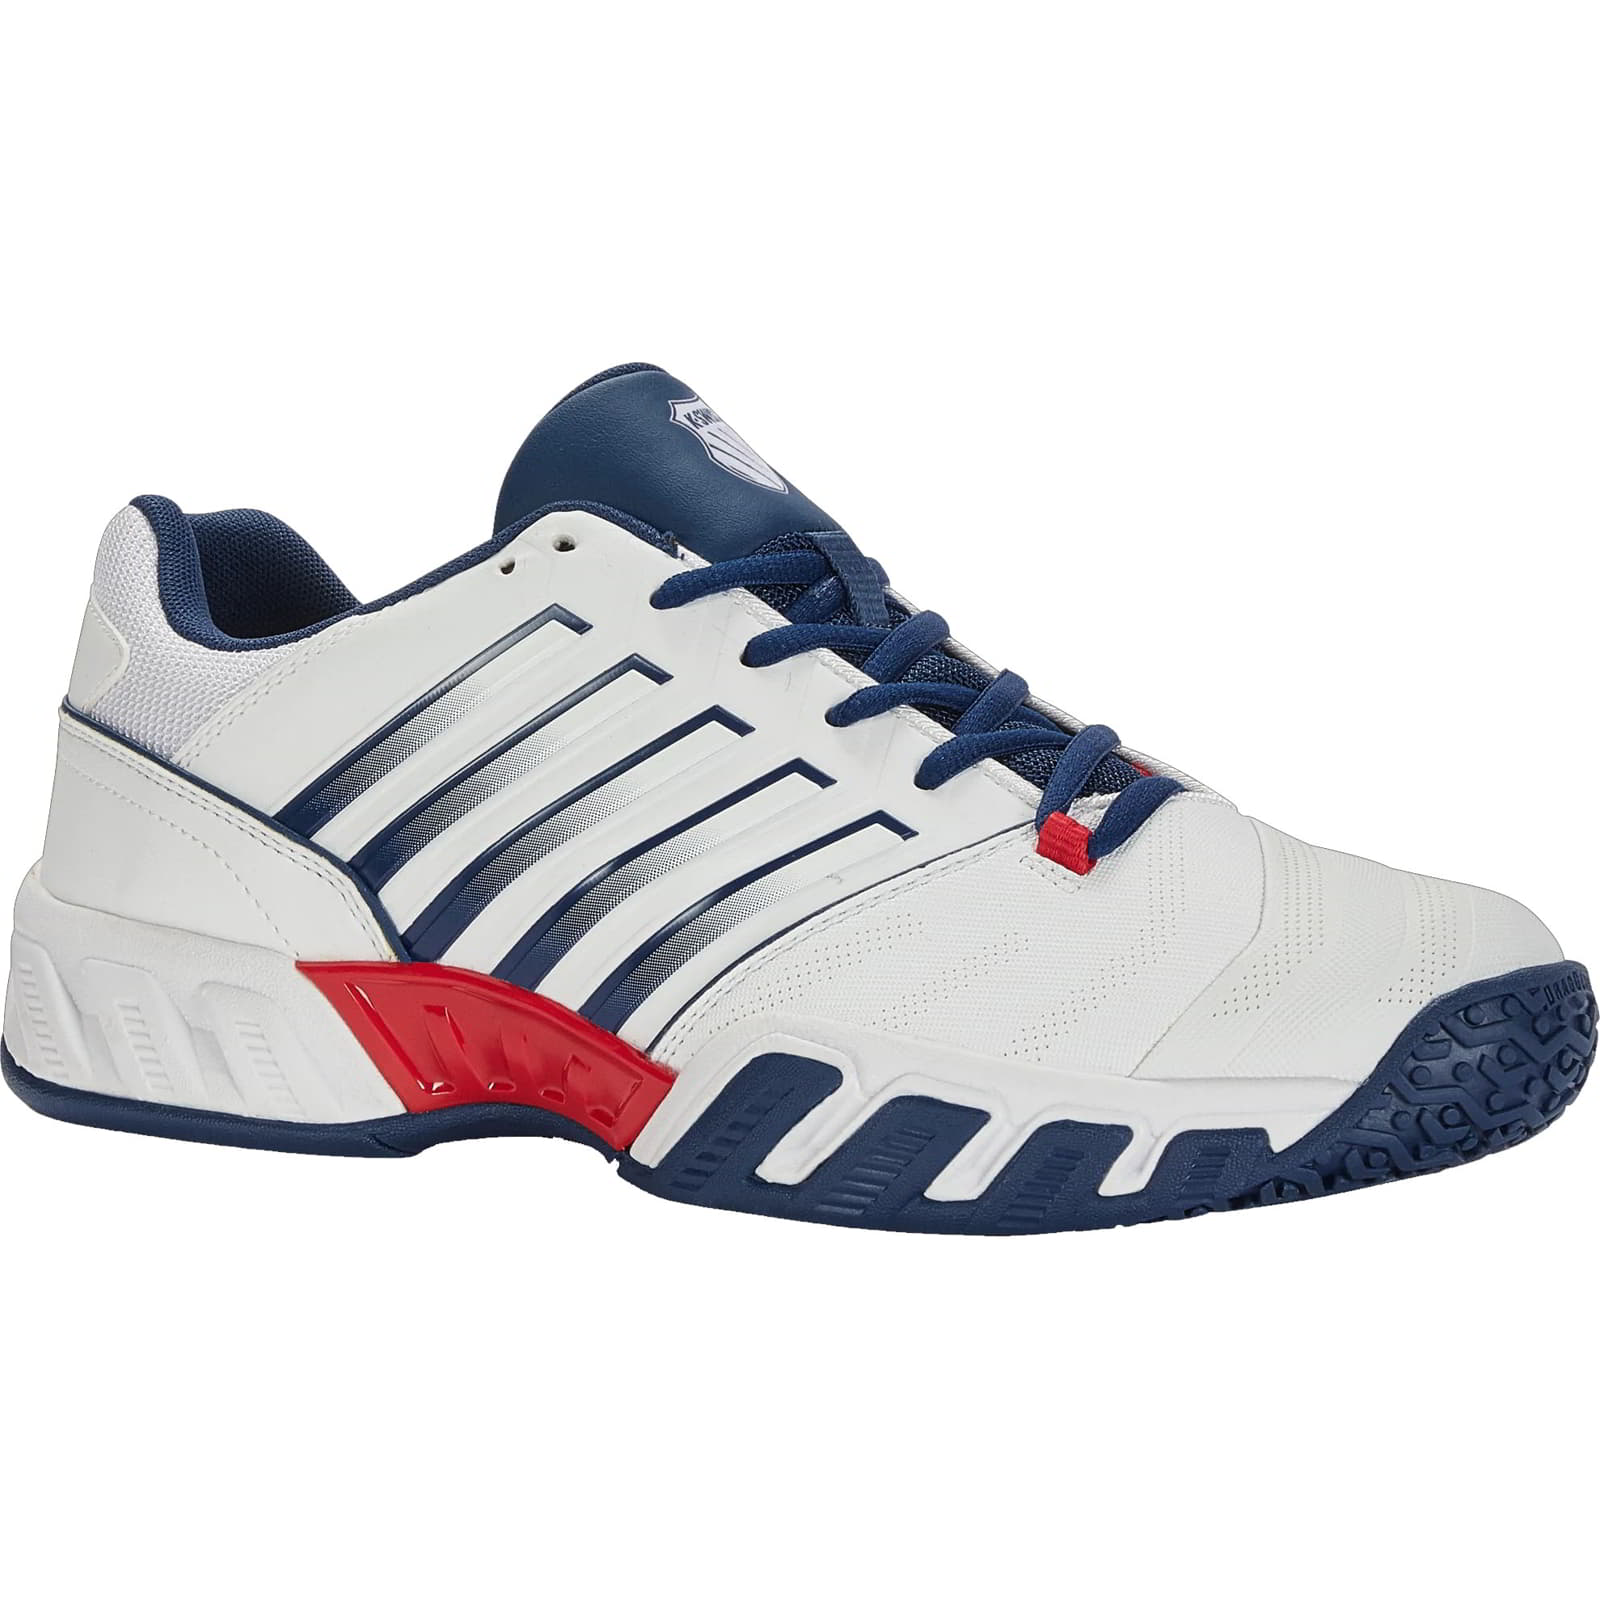 K-Swiss Bigshot Light 4 Omni Tennis Shoes Trainers - UK 10